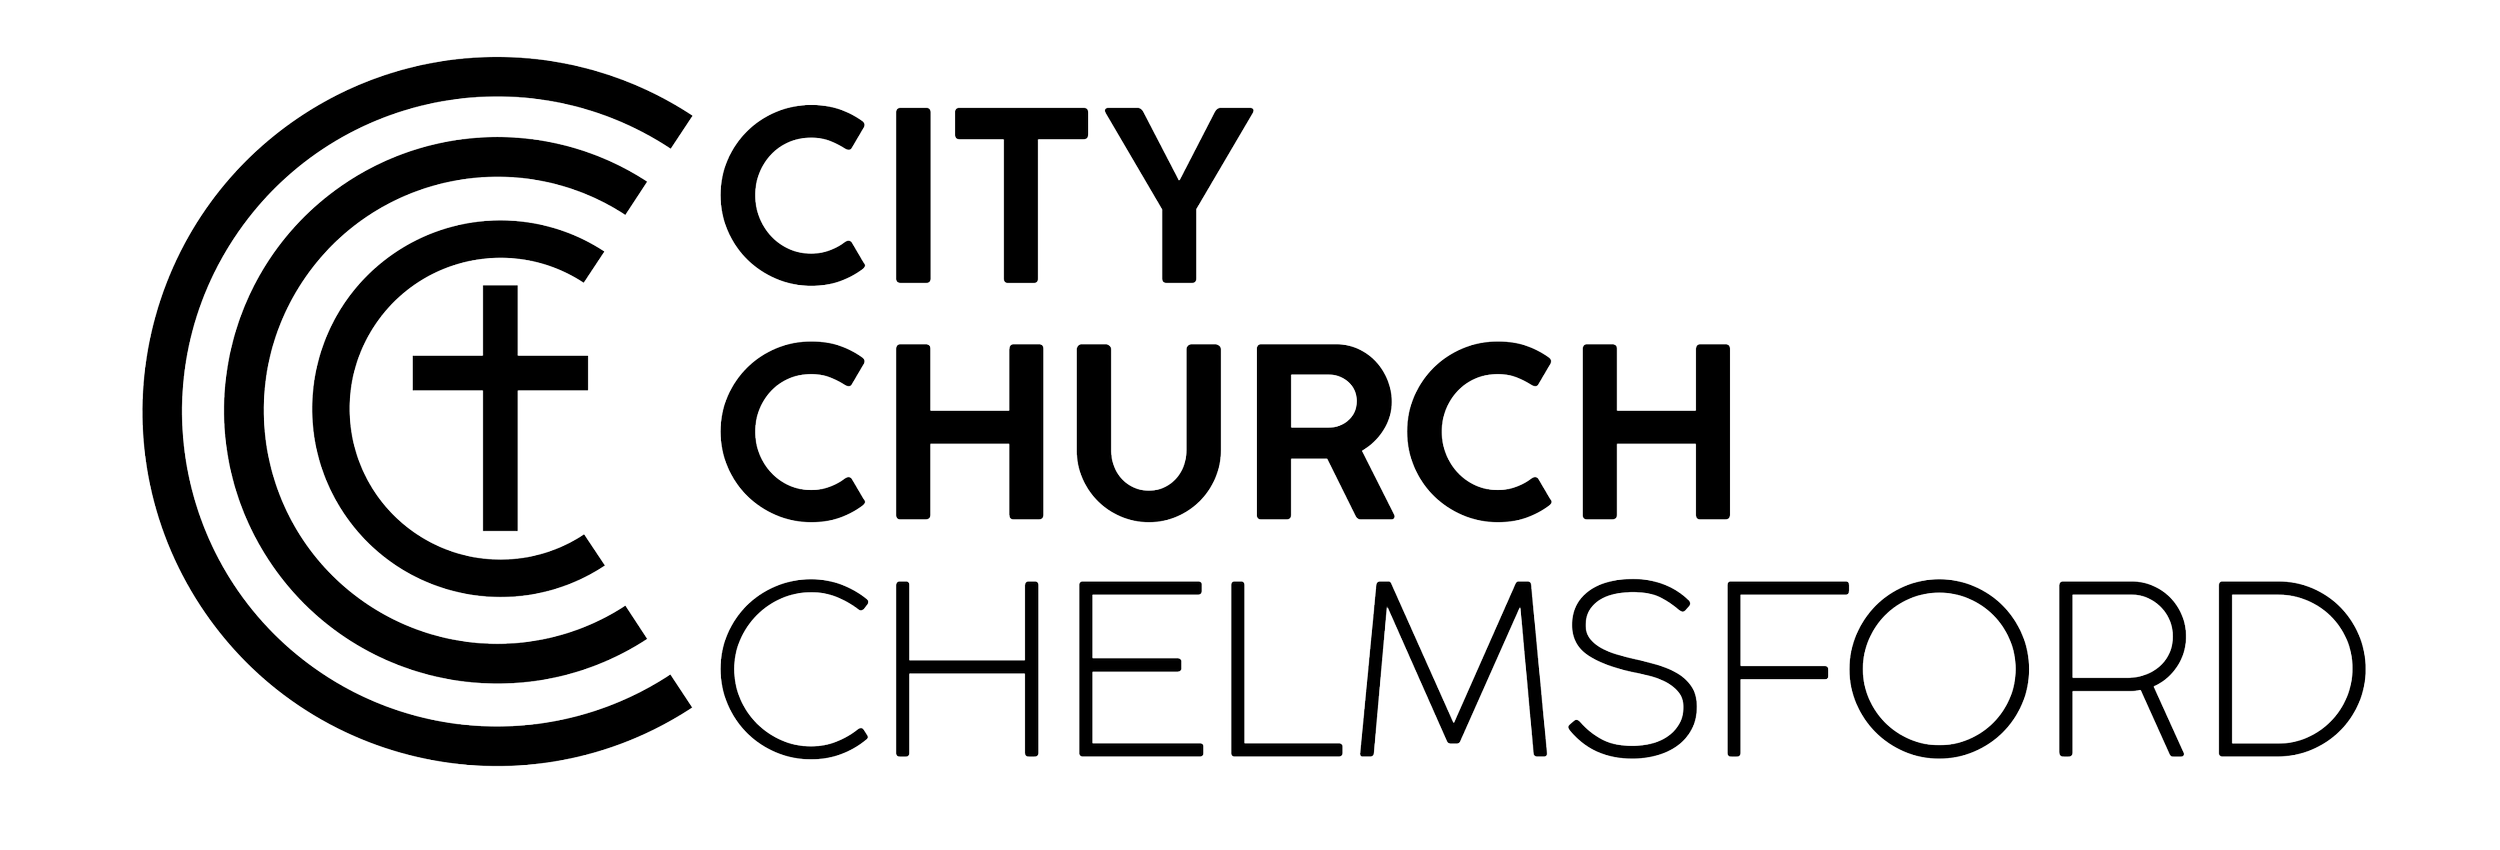 City Church Chelmsford